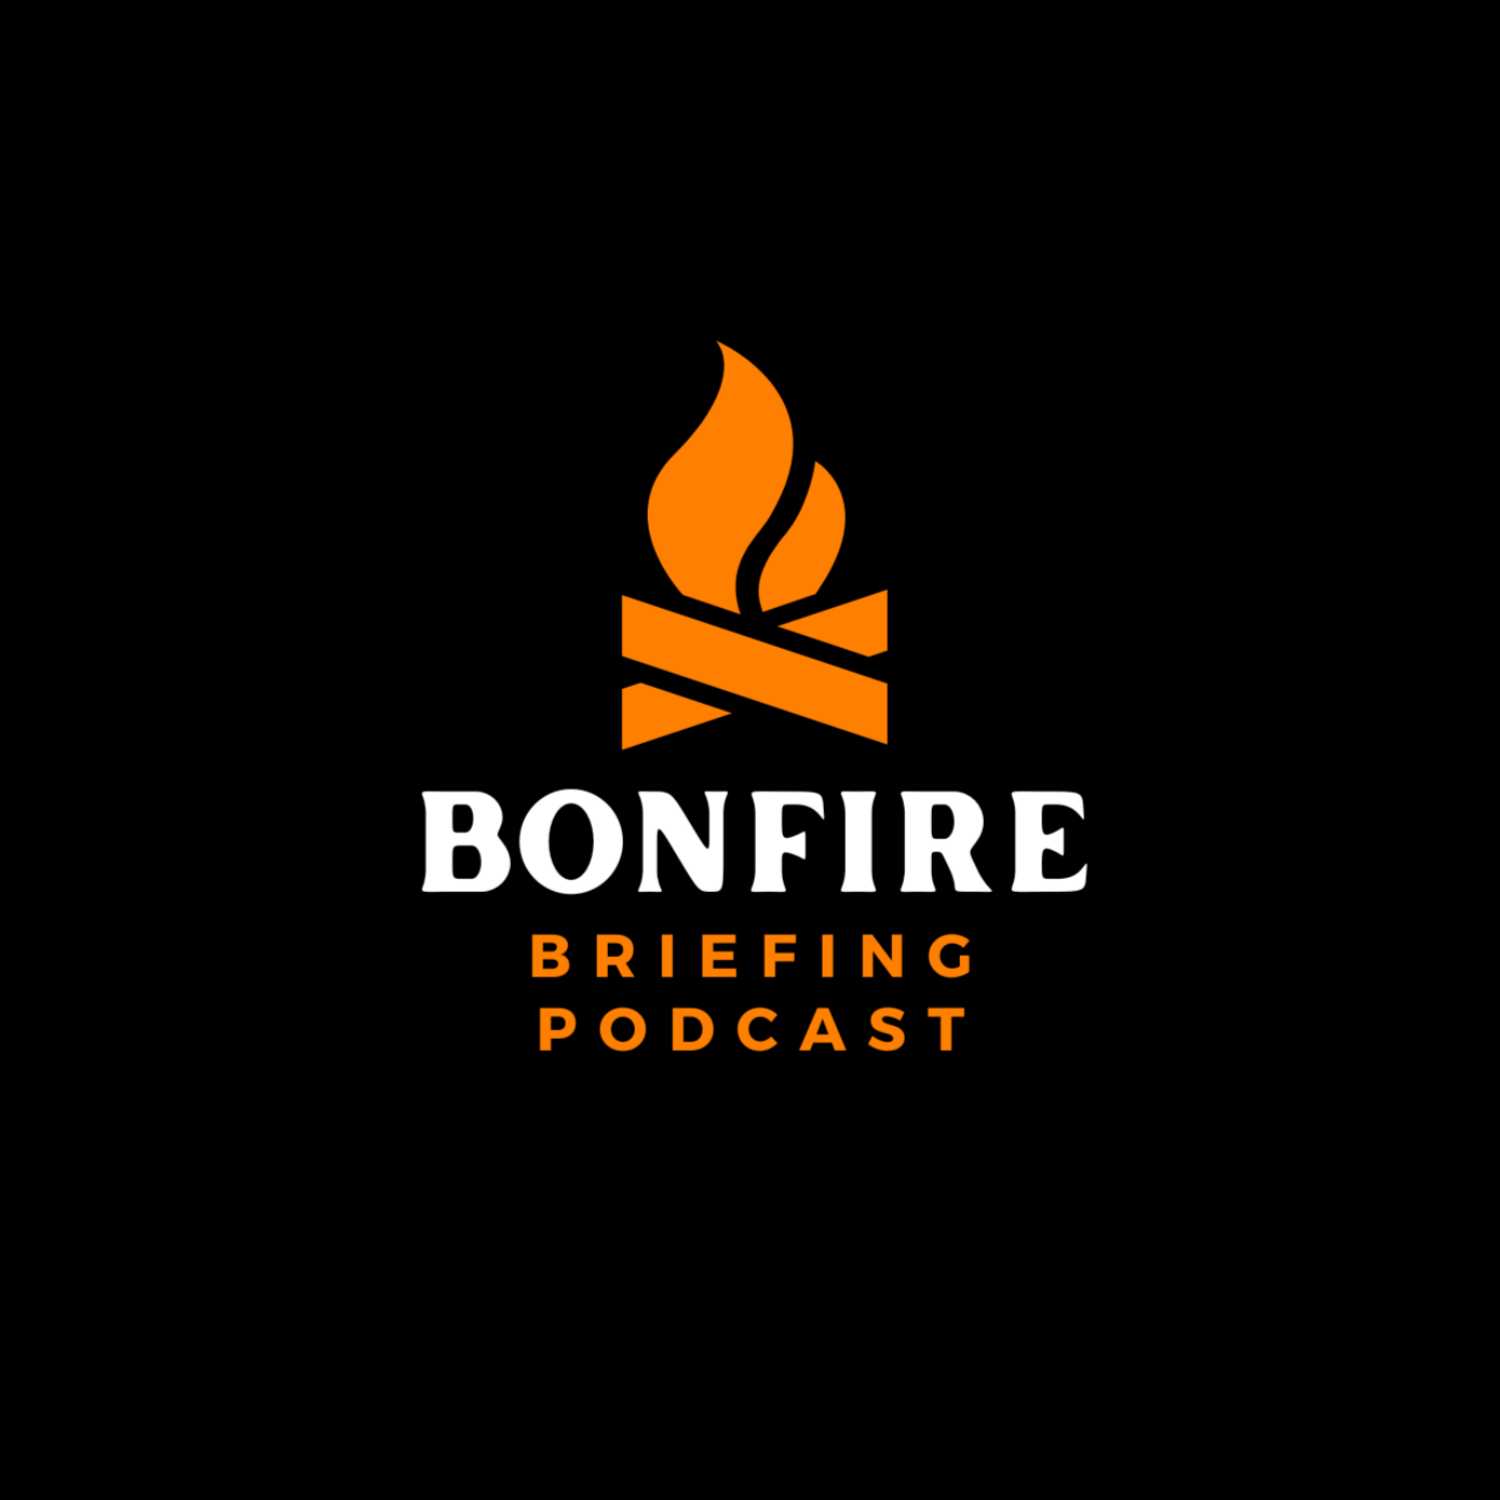 Bonfire Briefing Podcast